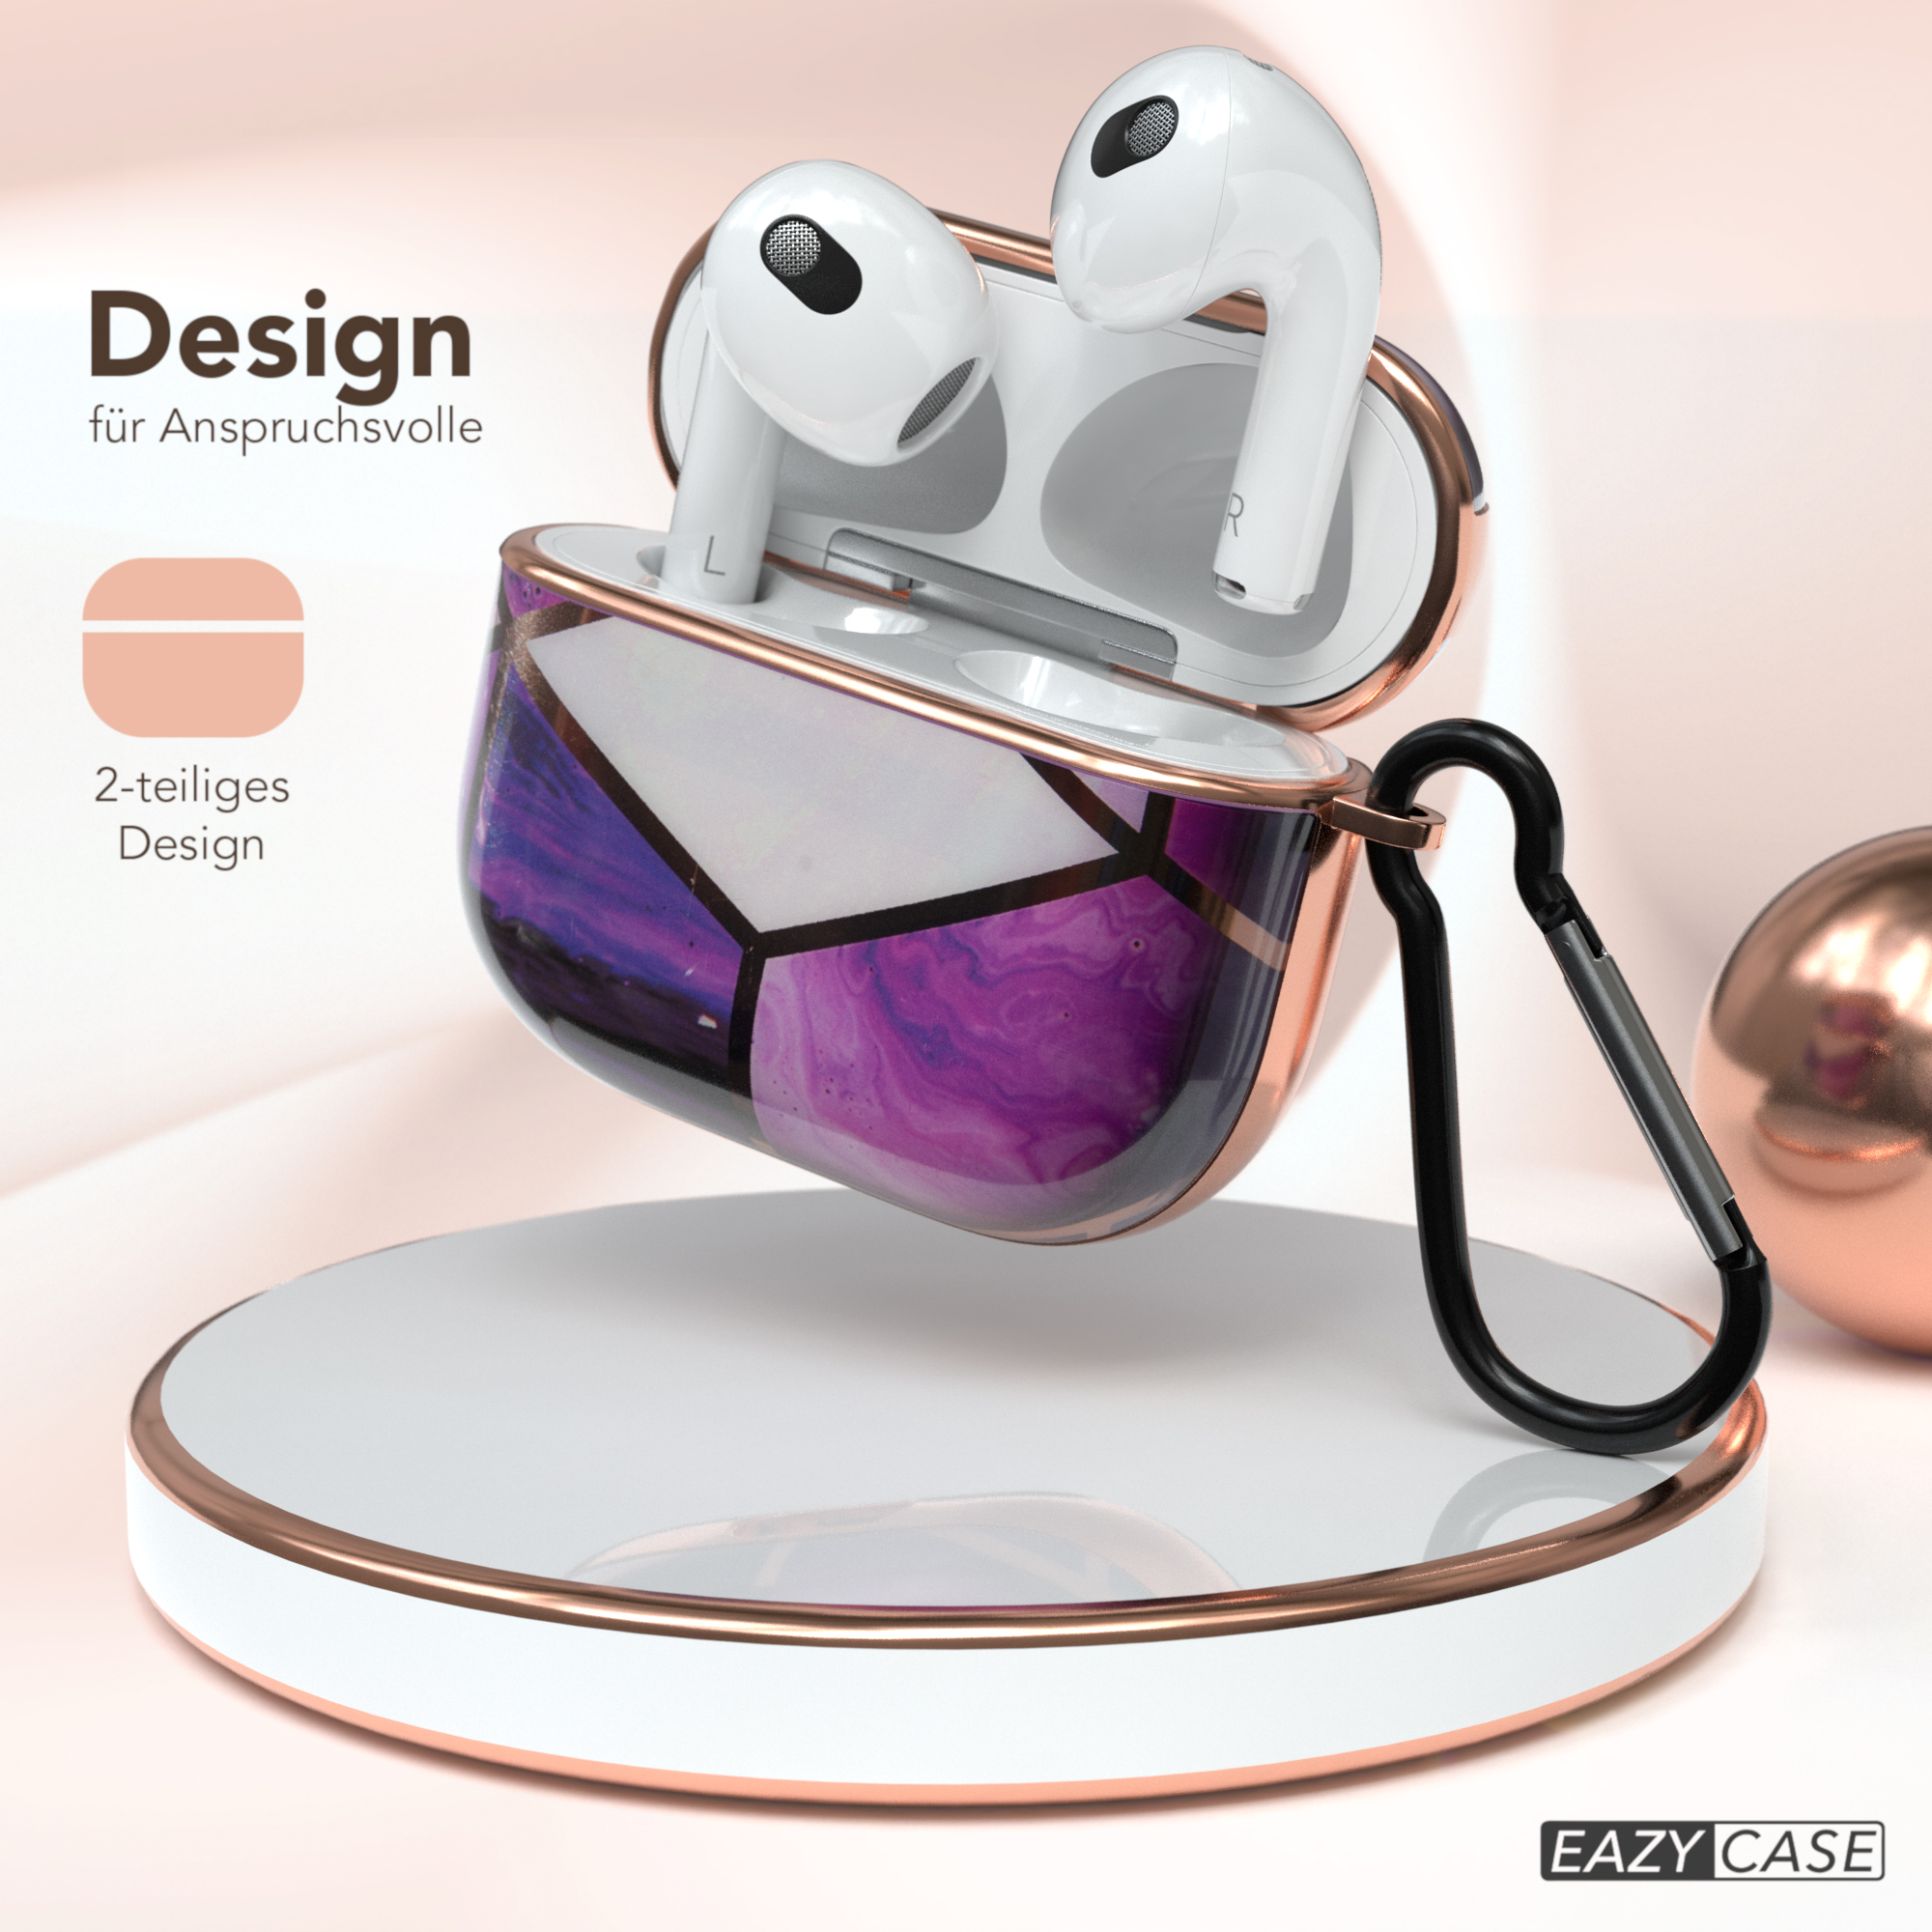 EAZY CASE AirPods für: Sleeve Rosegold Case / Motiv passend Lila Schutzhülle 3 IMD Apple